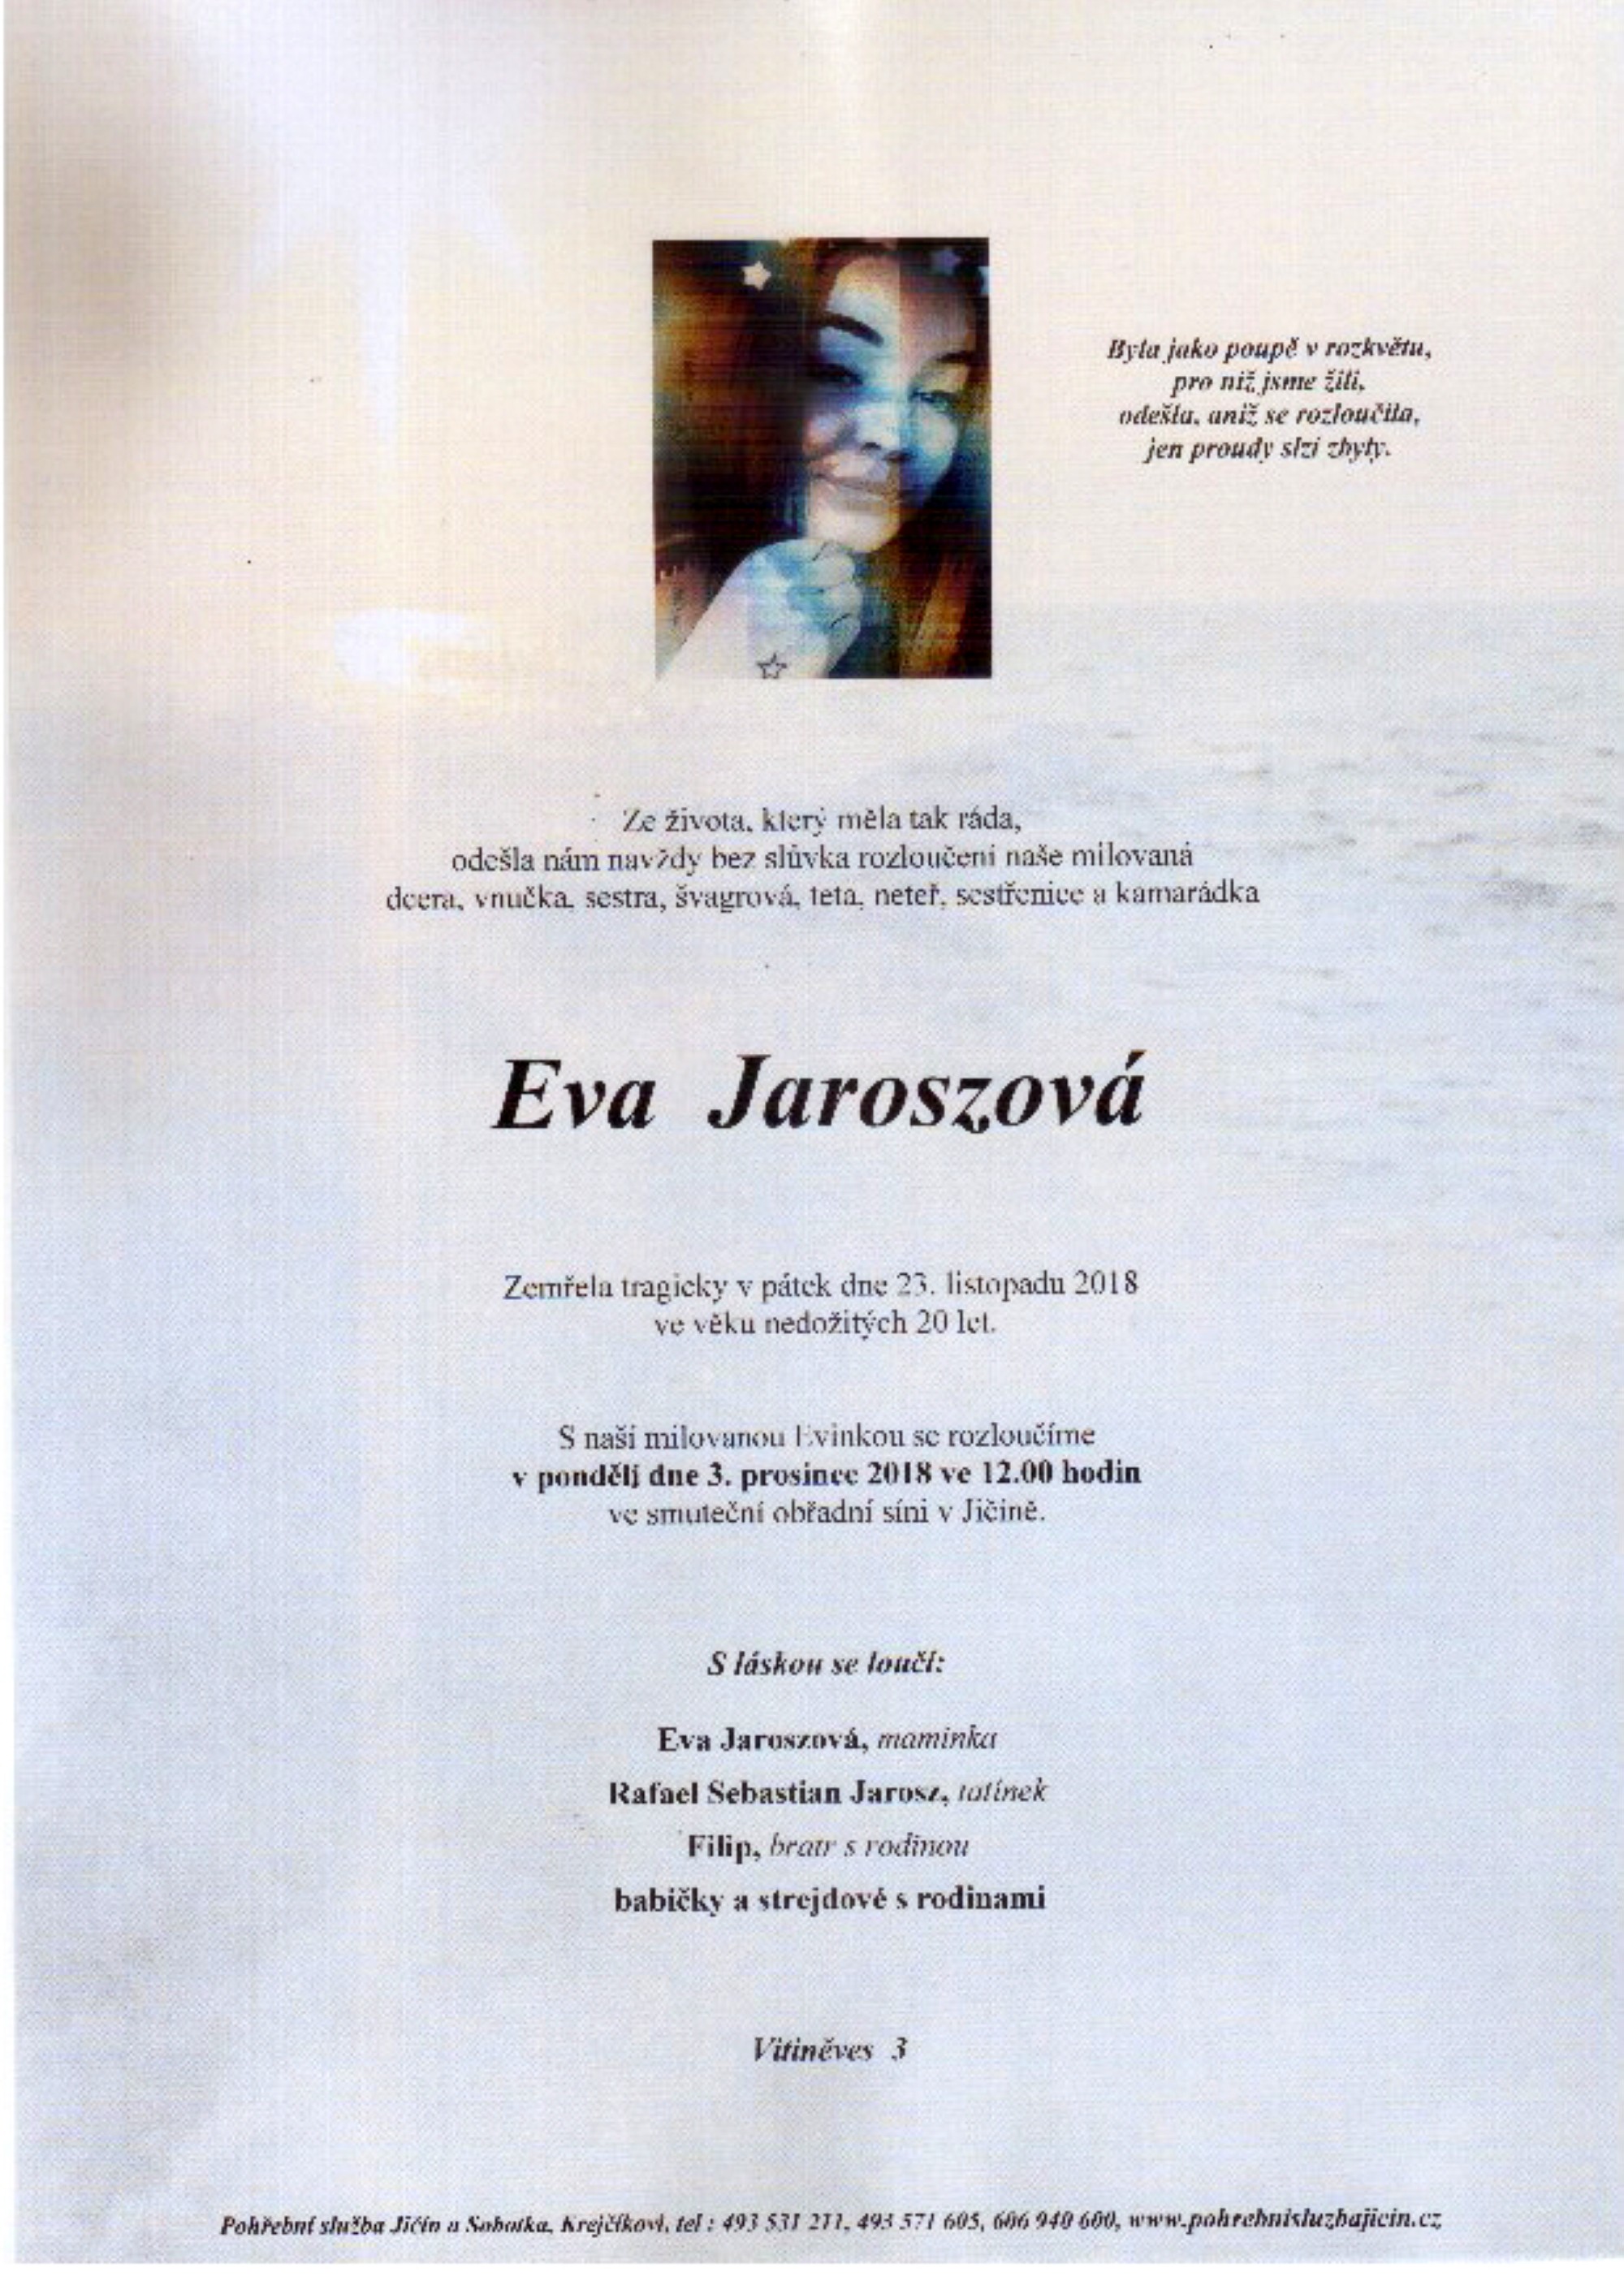 Eva Jaroszová